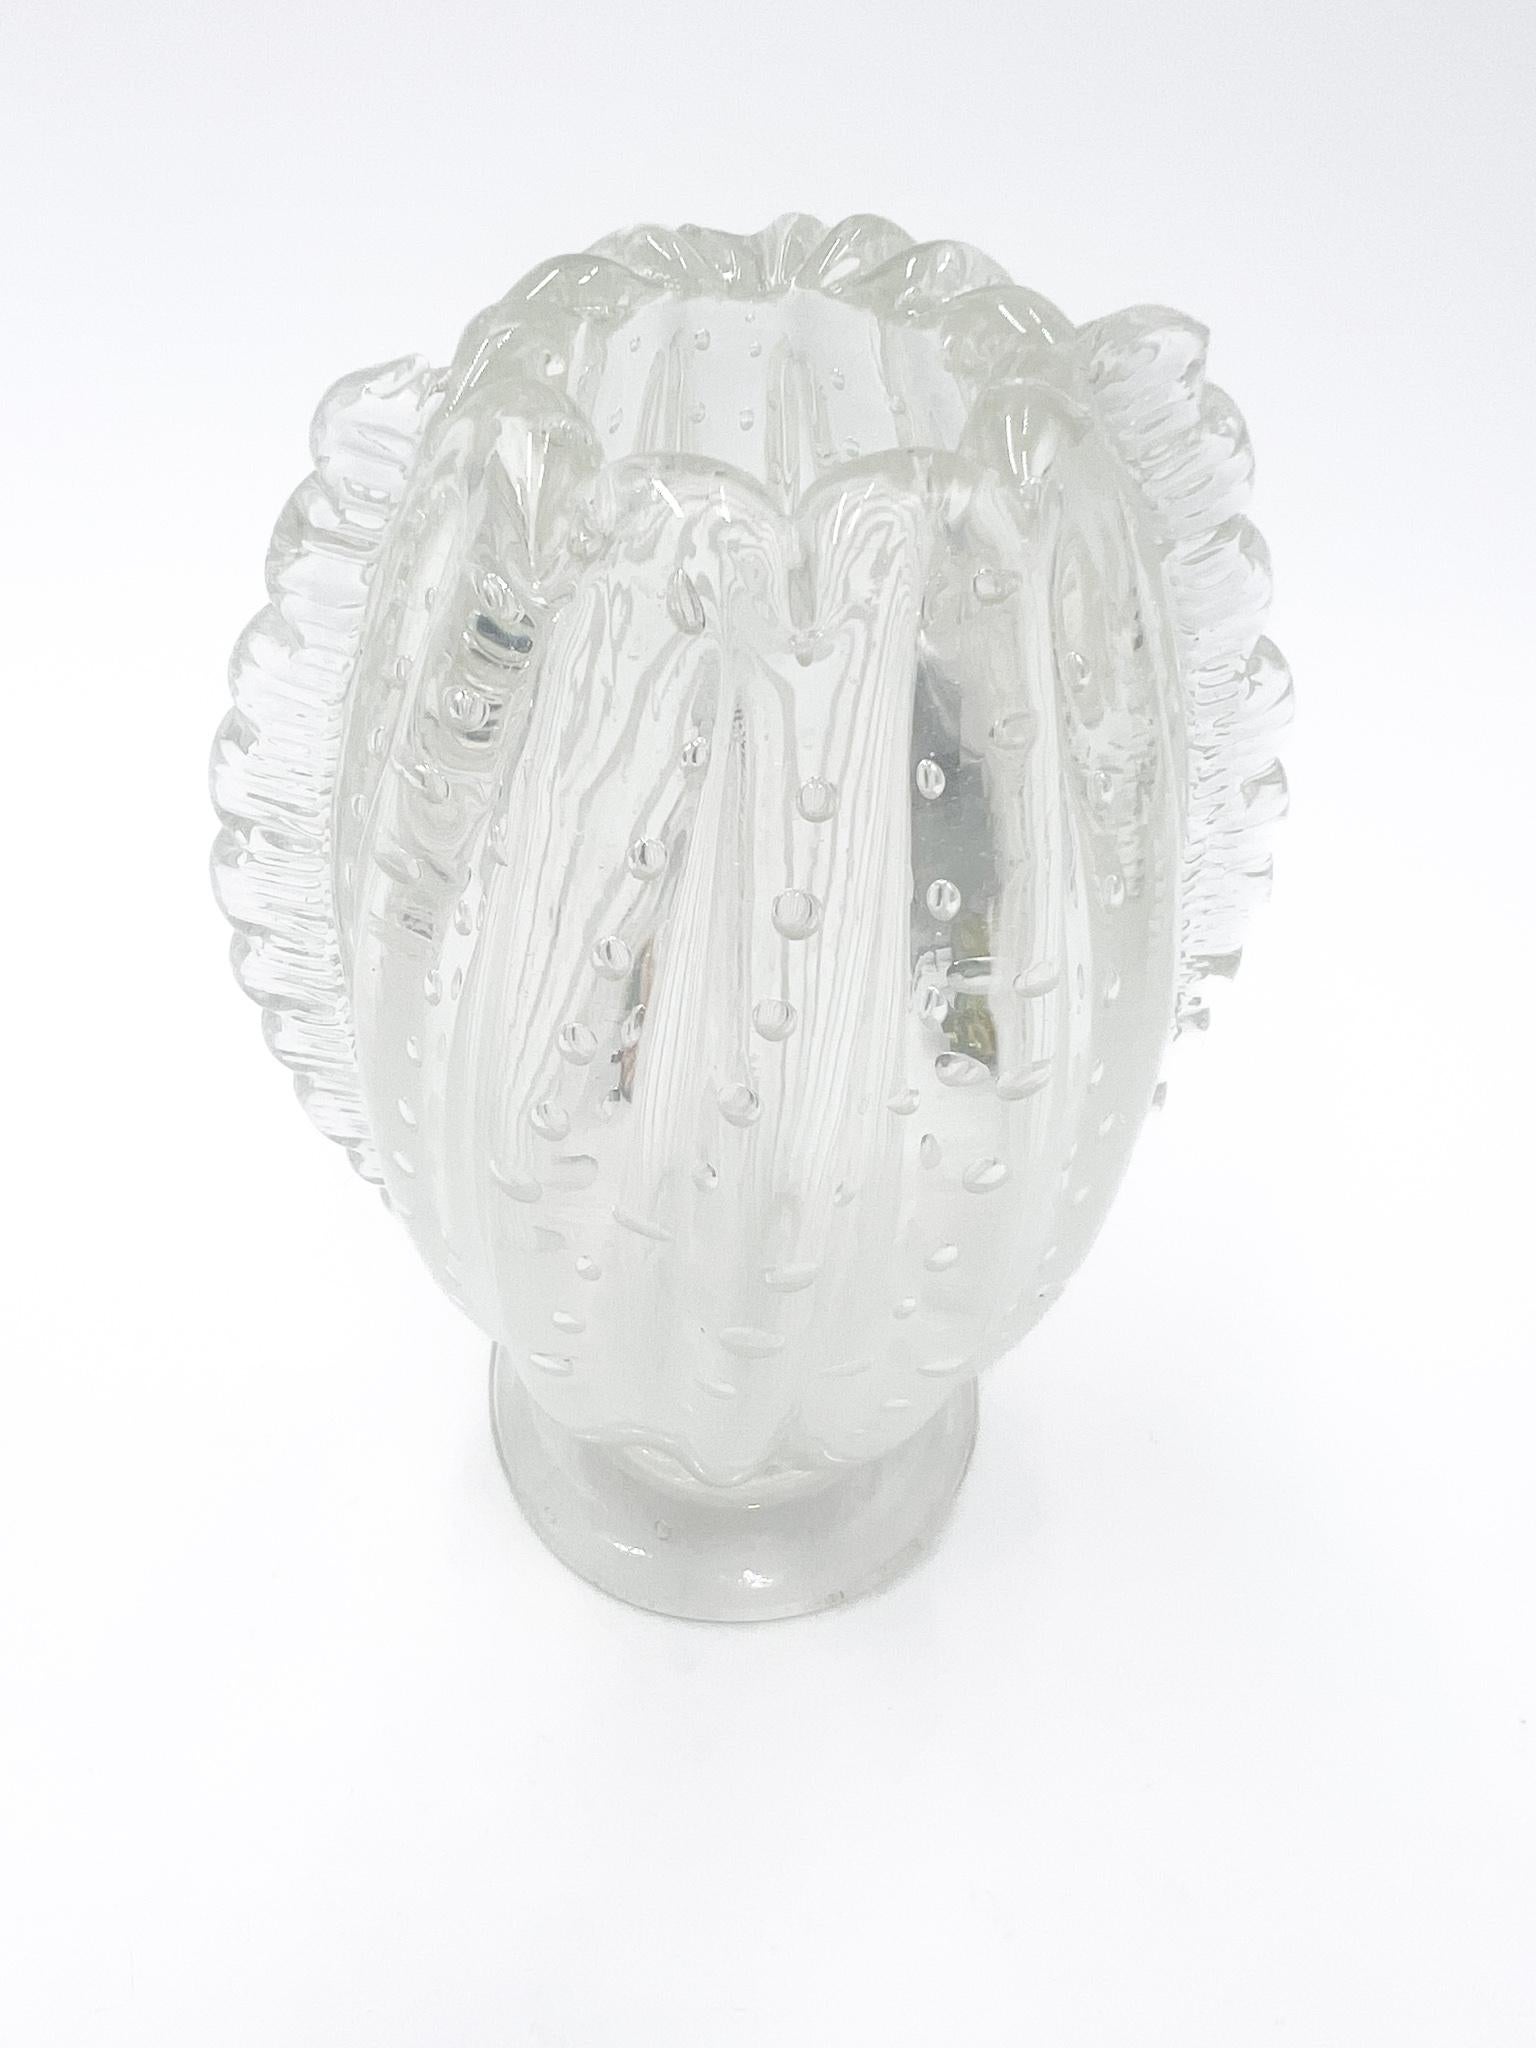 Italian Murano Glass Vase by Barovier from the 1960s